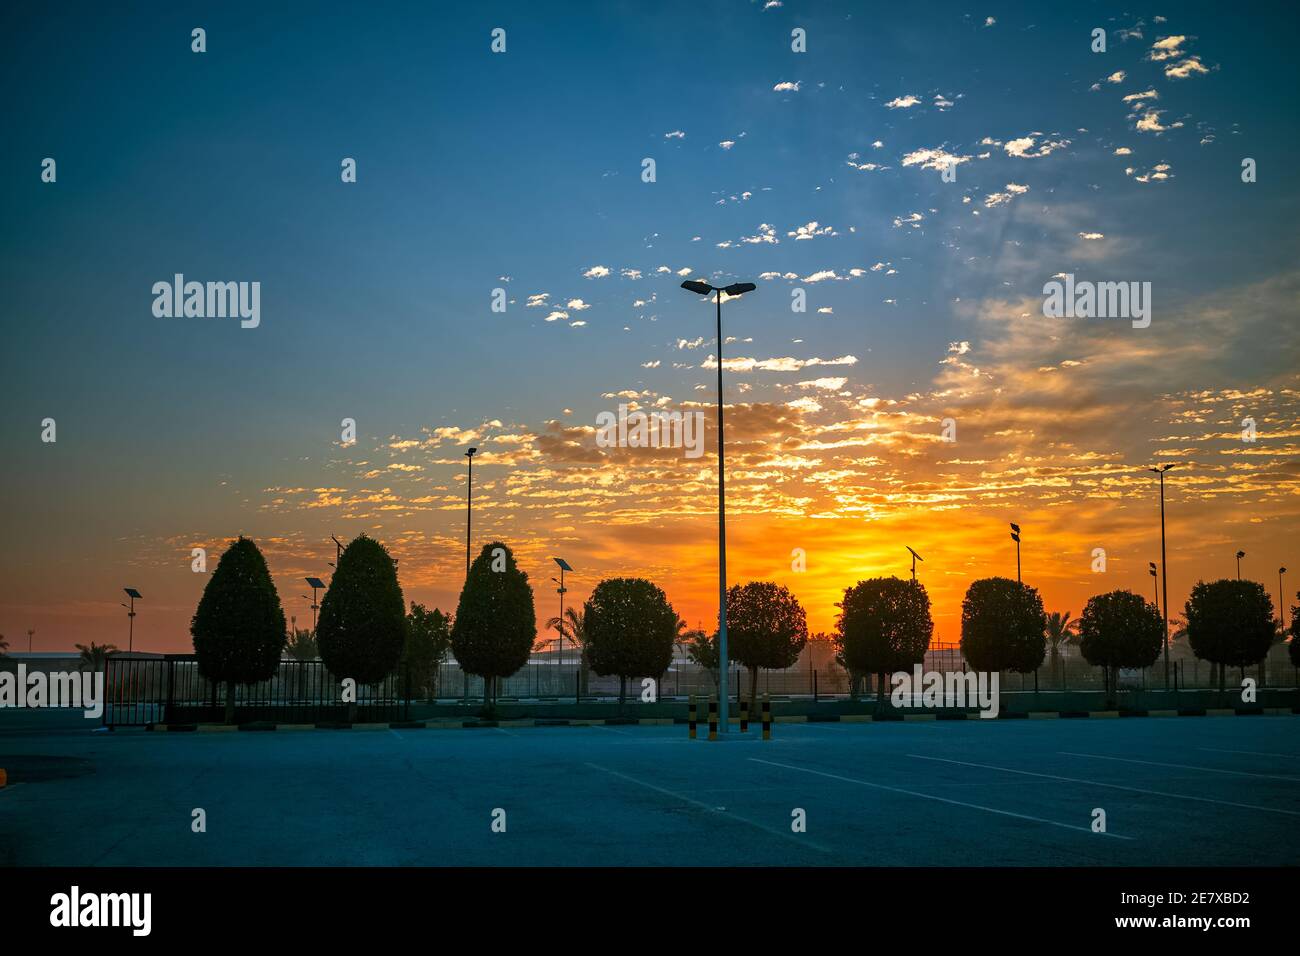 Beautiful sunset view in King fahad park Saudi Arabia. Selective focus background blurred. Stock Photo